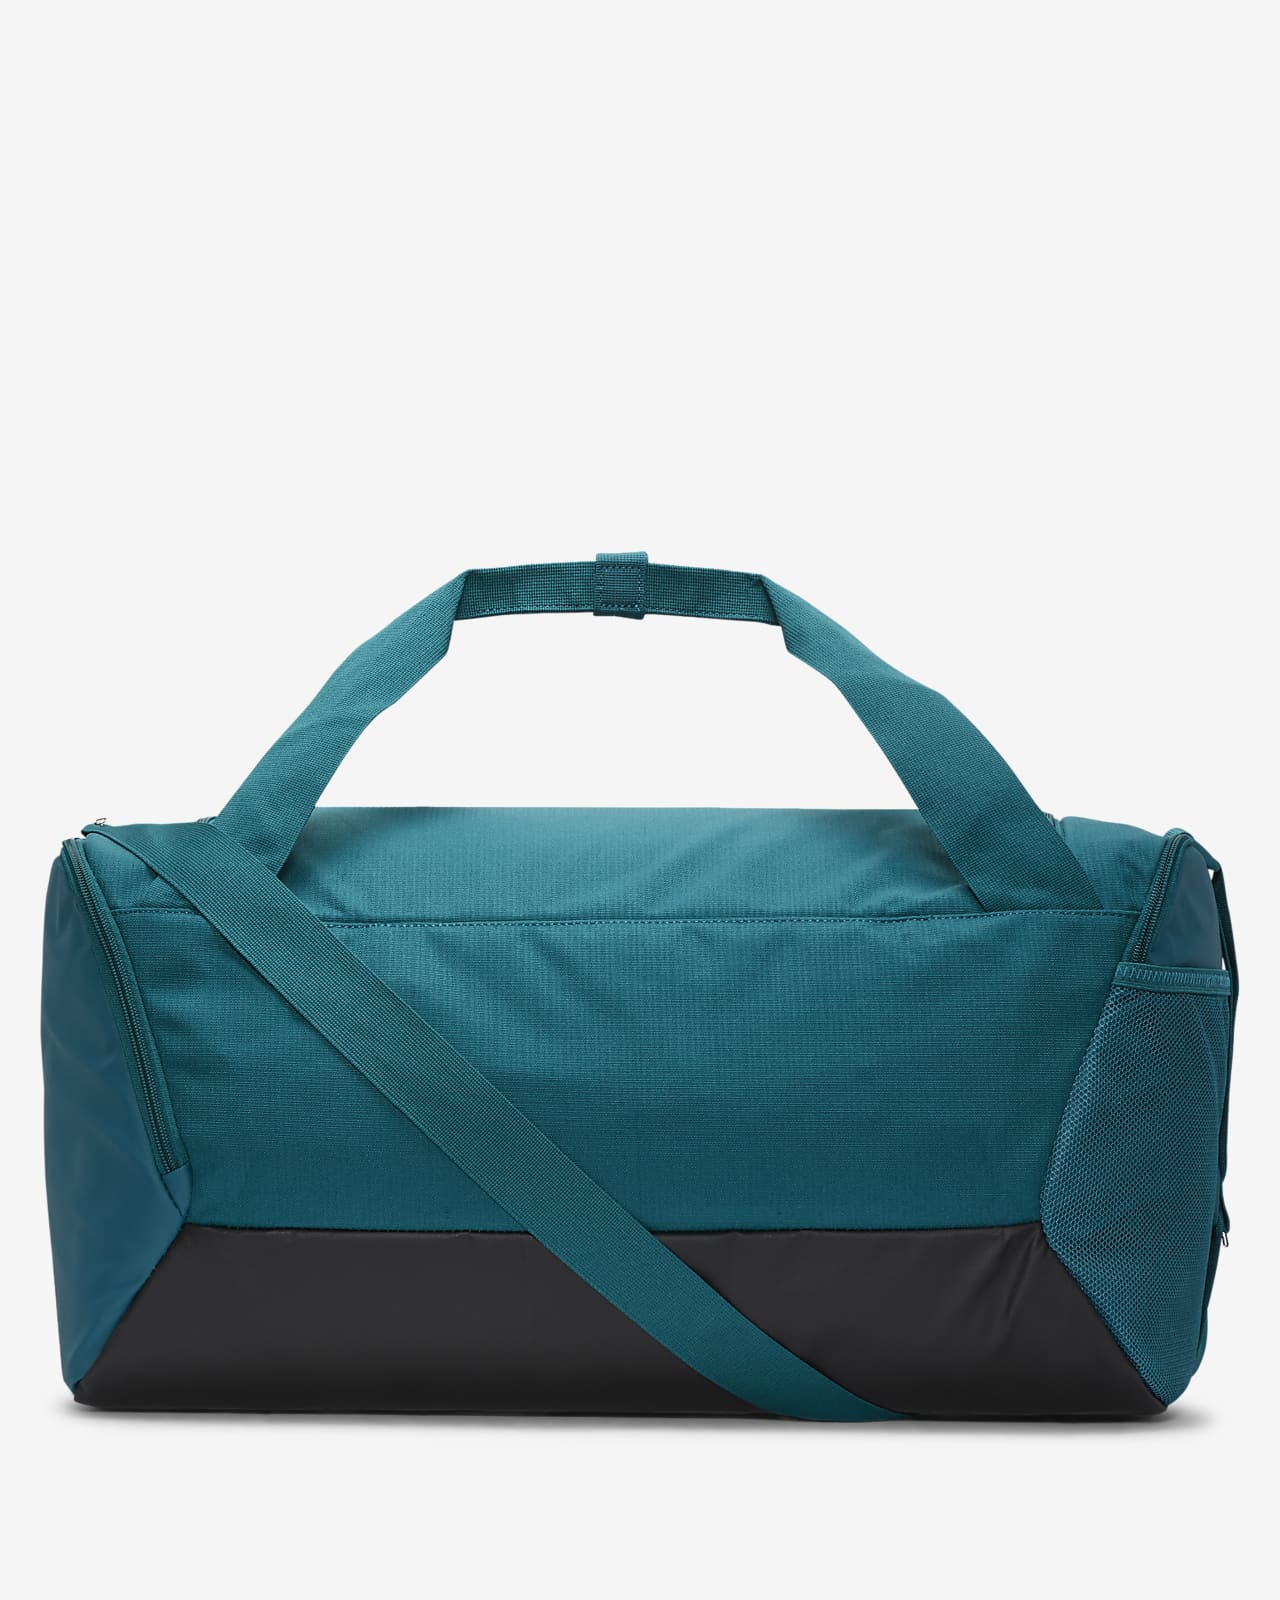 Nike Brasilia 9.5 Duffle Bag (Small) - Colgan Sports